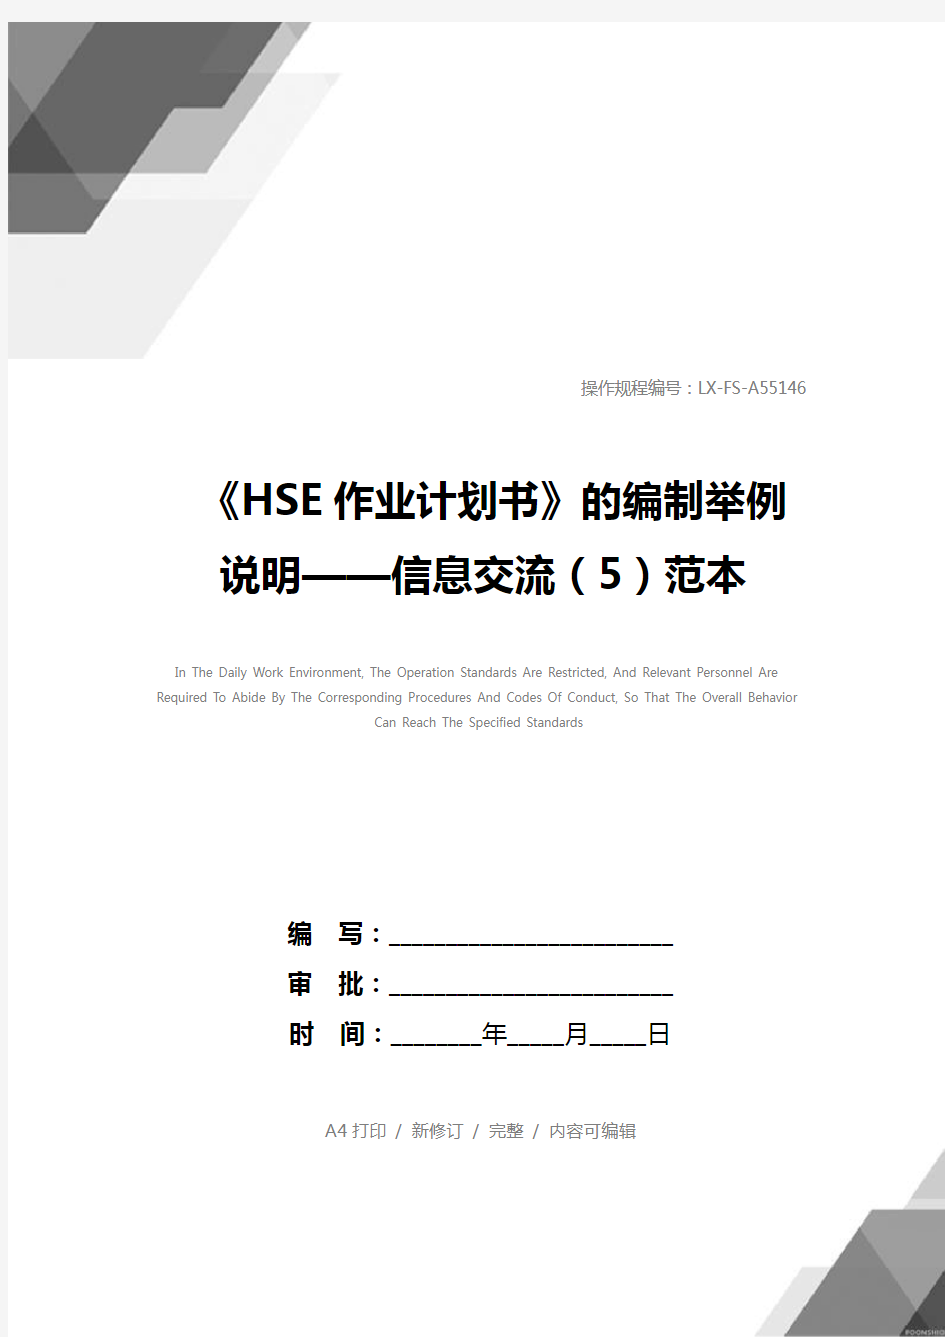 《HSE作业计划书》的编制举例说明——信息交流(5)范本